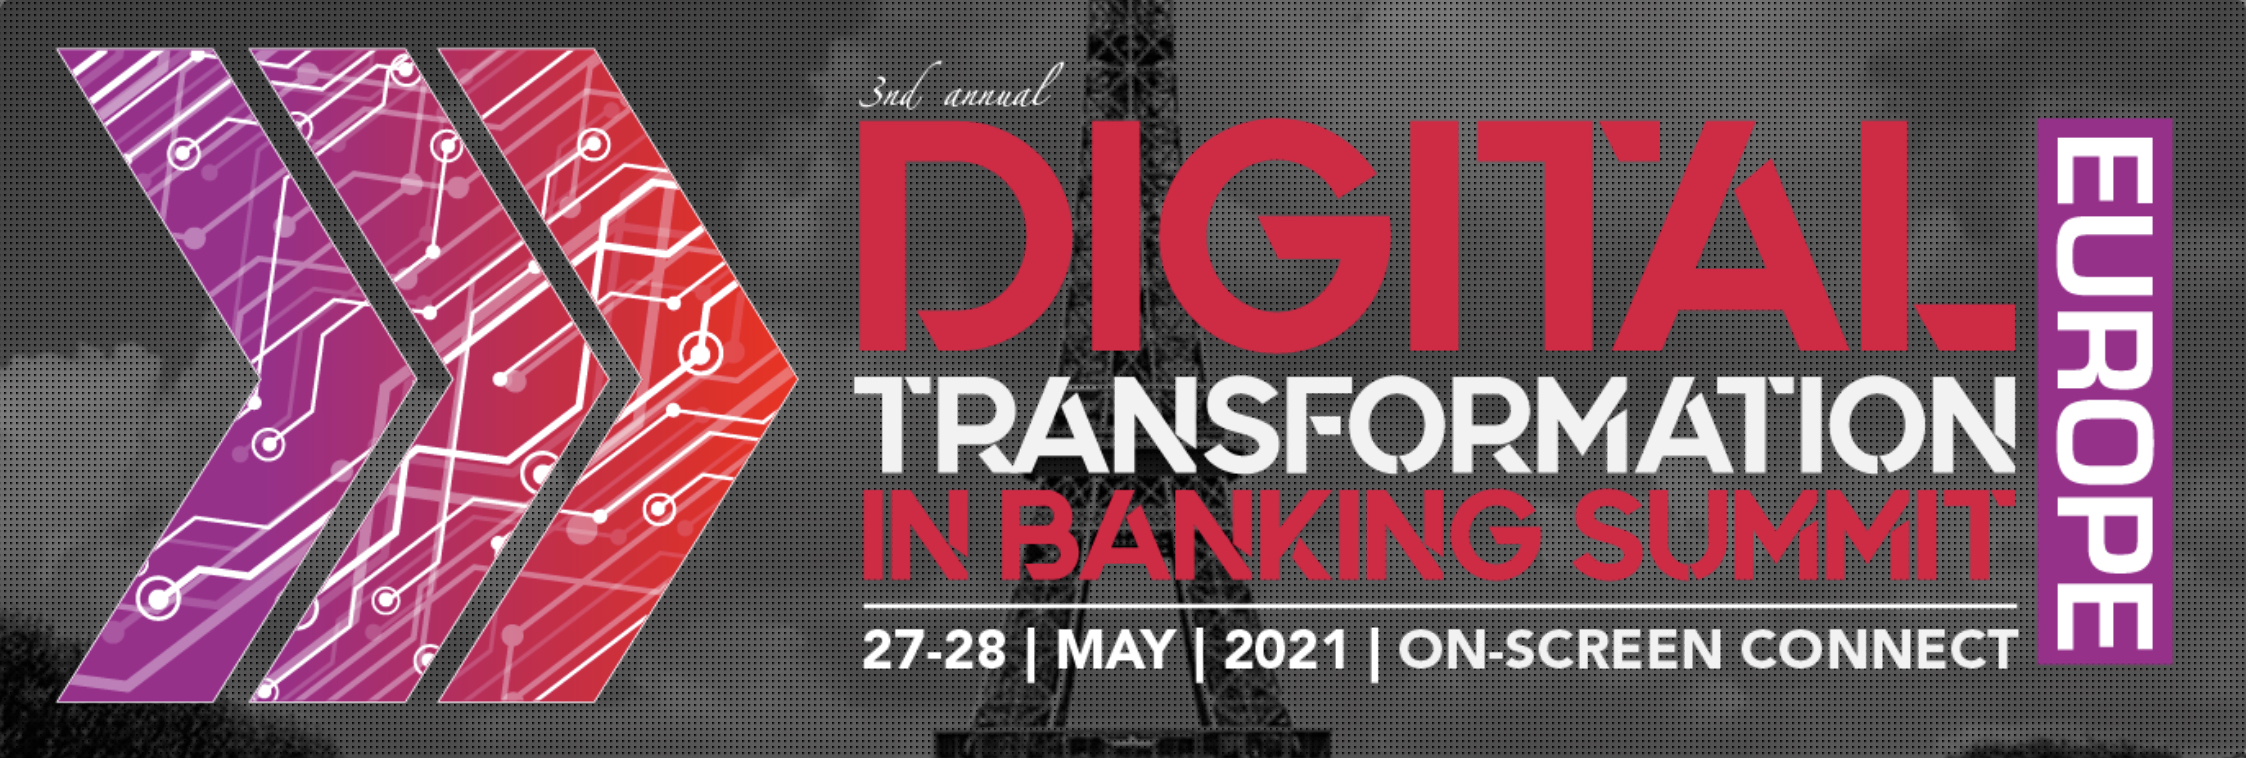 ebpSource at Digital Transformation in Banking, Europe 2021